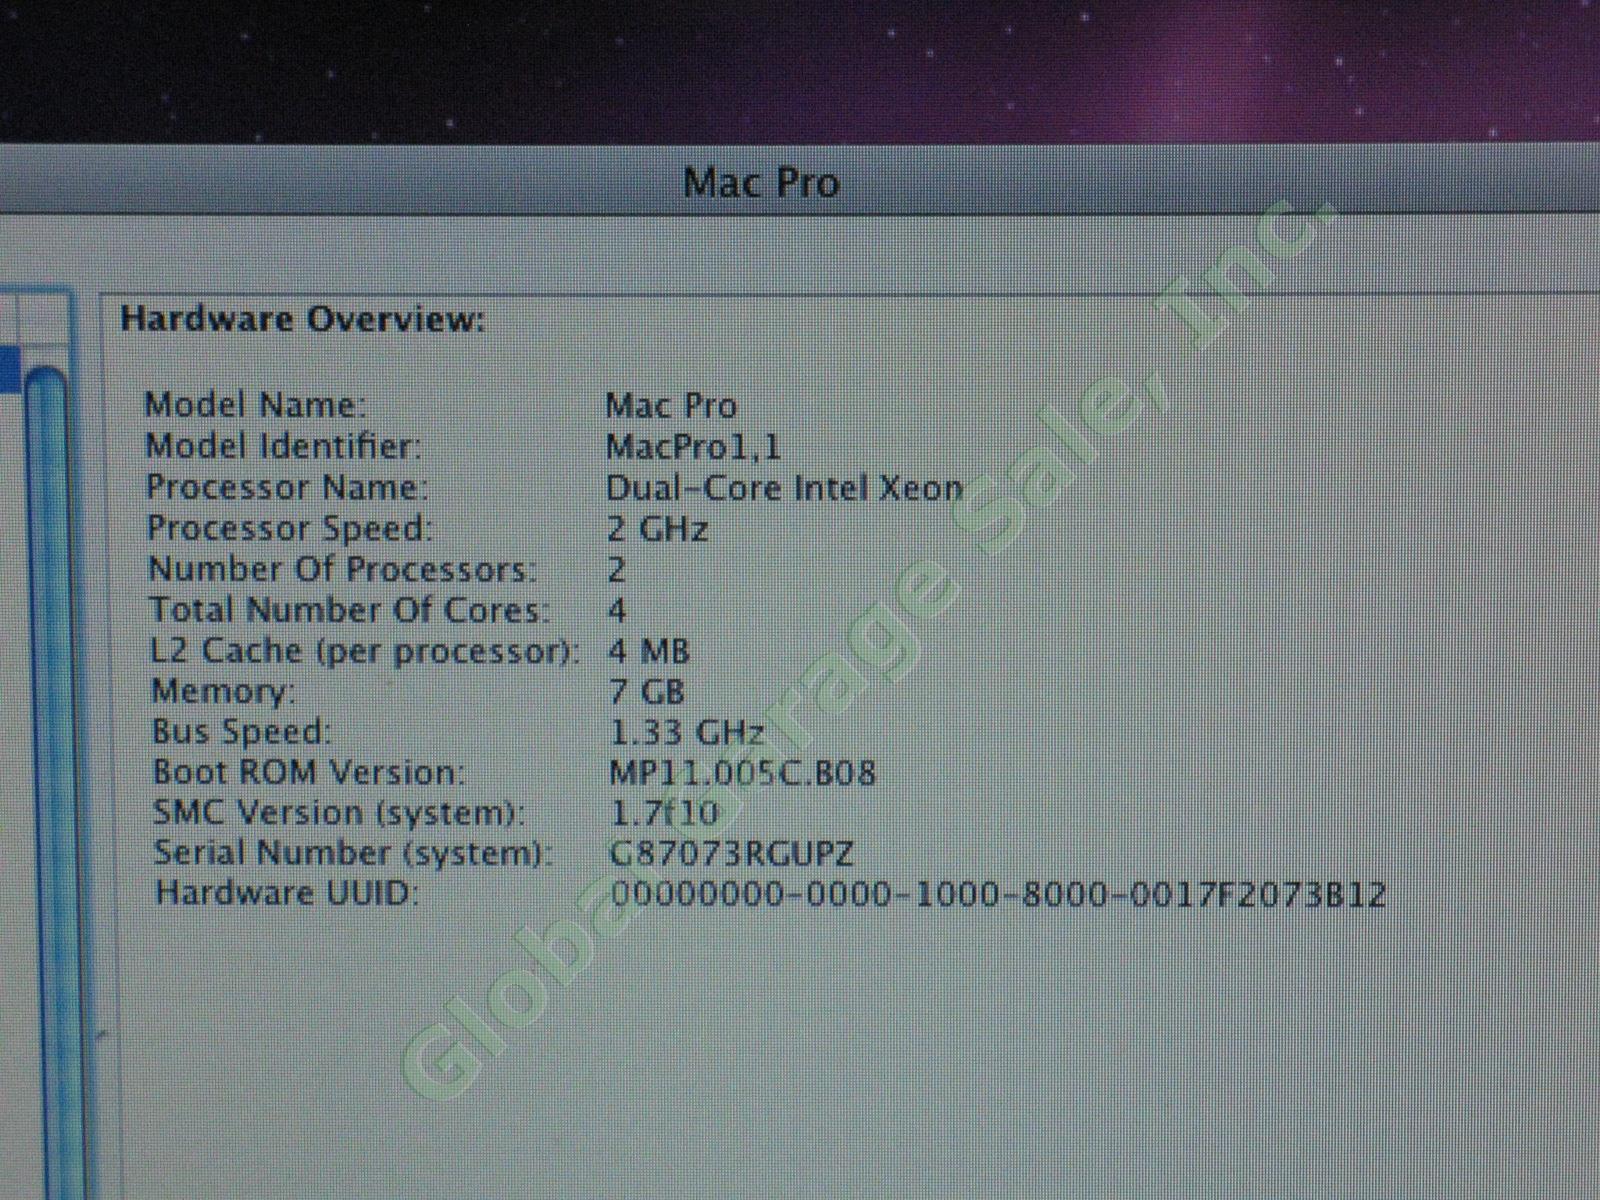 Apple Mac Pro A1186 Desktop Computer 7GB RAM 160GB HDD 2GHz Dual Core Xeon 10.6 2